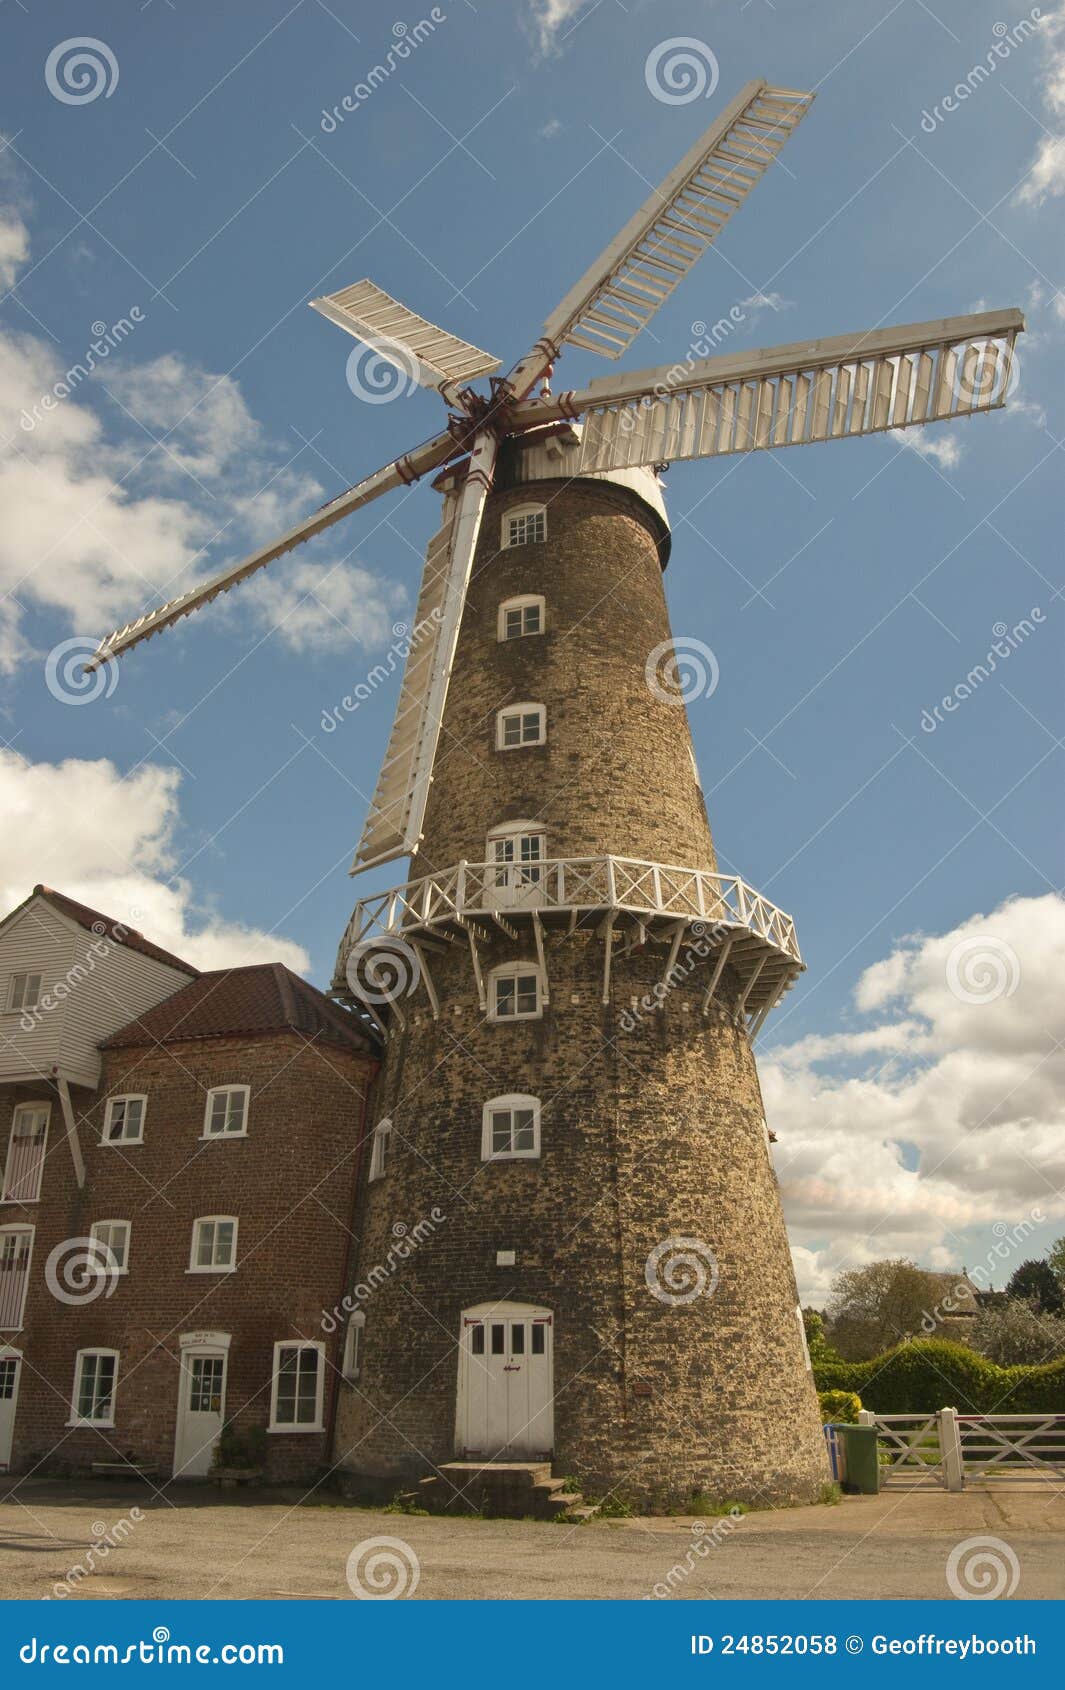 so tall, maude foster windmill. boston.